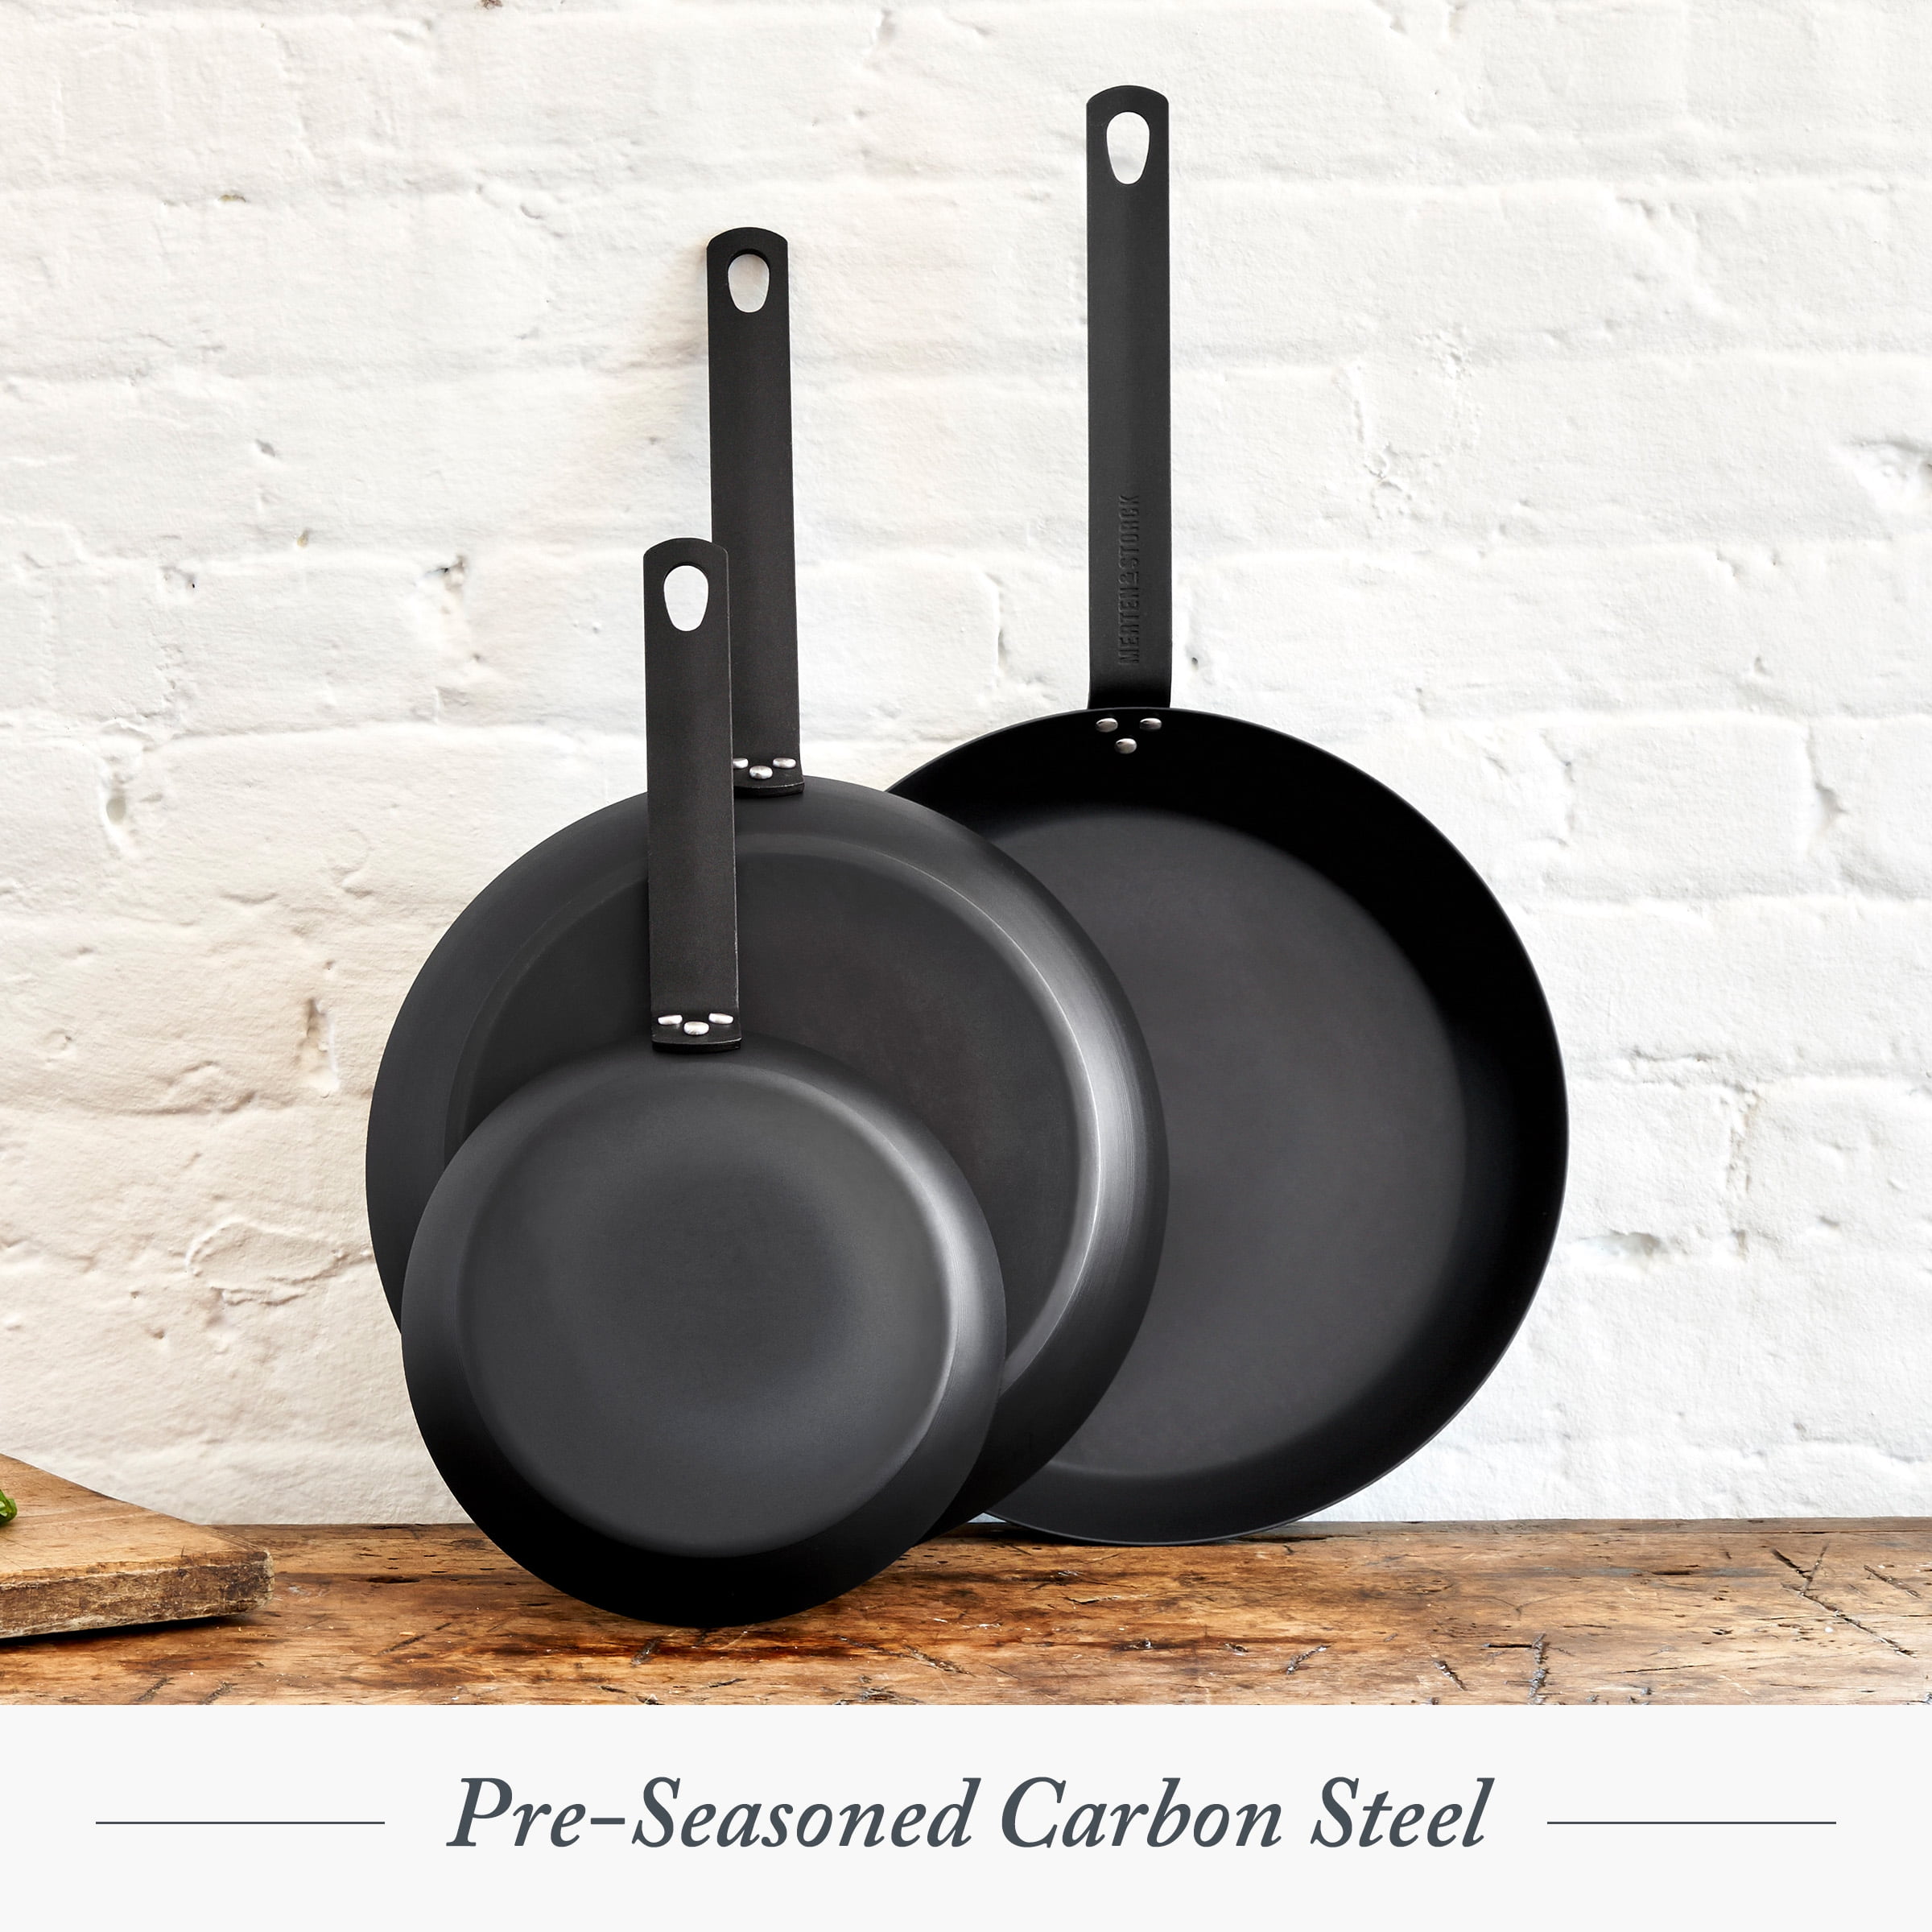 Merten & Storck Stainless Steel 8-Piece Cookware Set - Stainless Steel